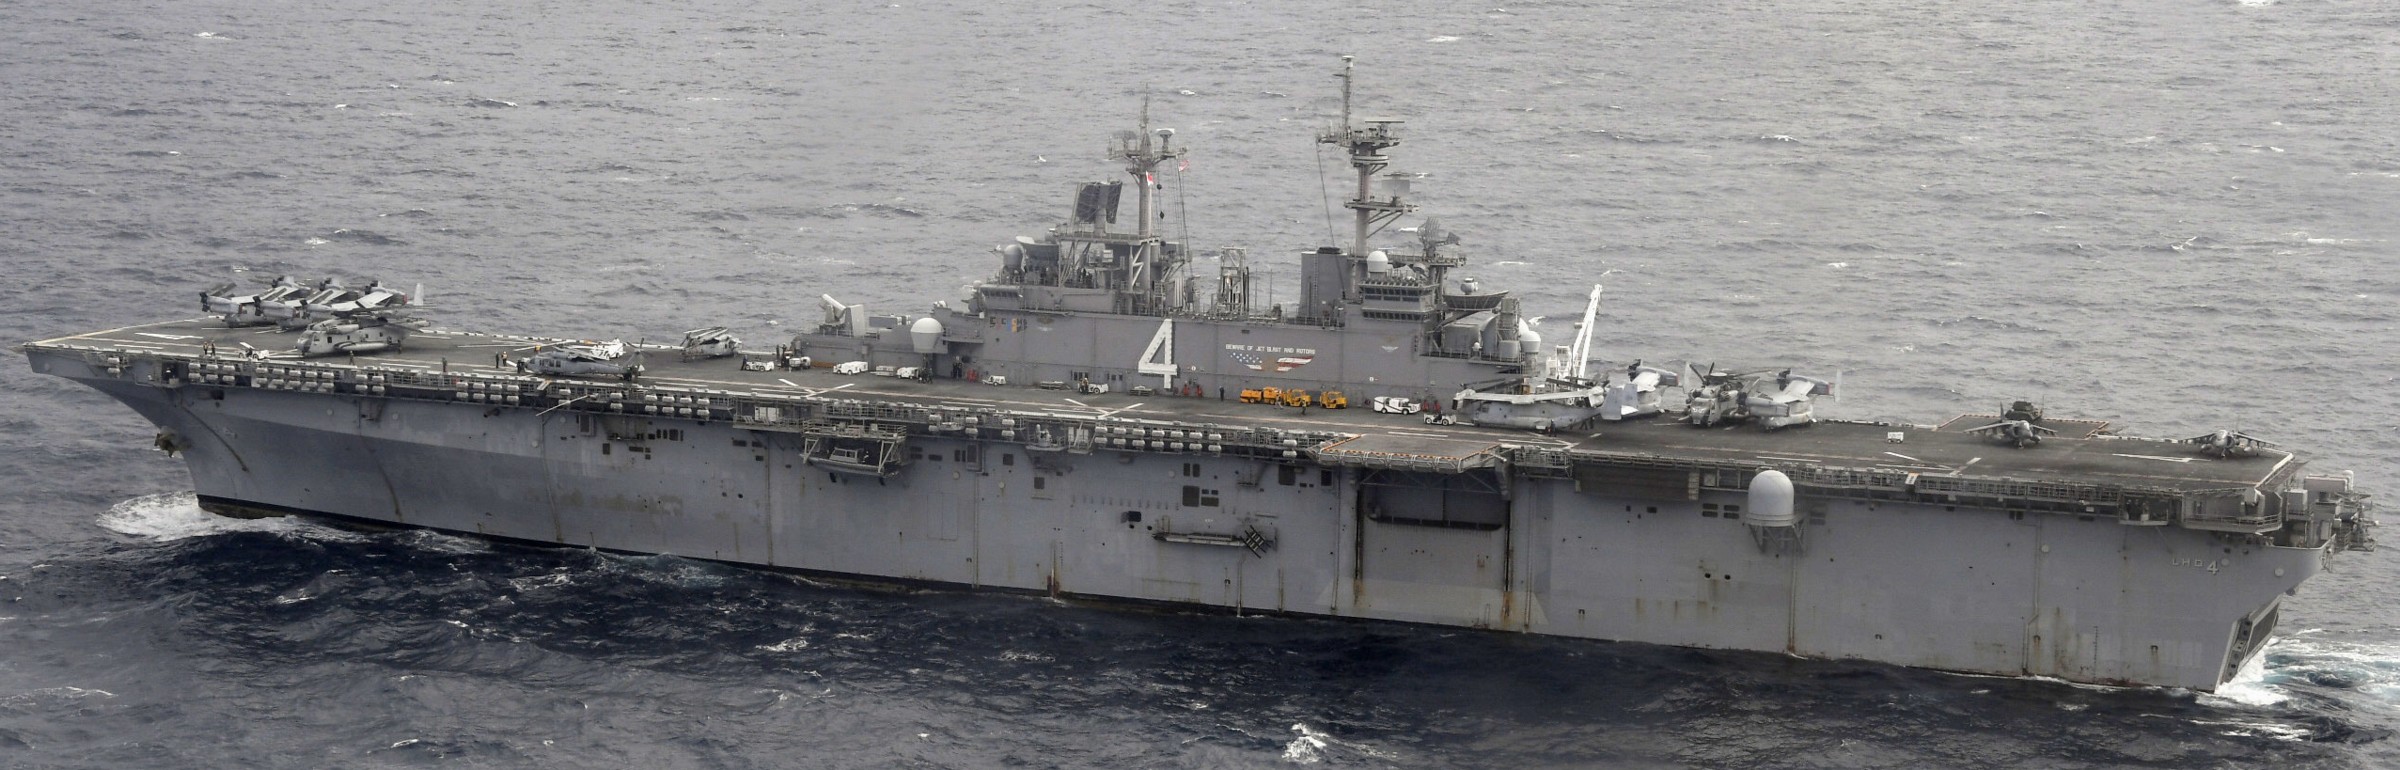 lhd-4 uss boxer wasp class amphibious assault ship landing helicopter dock us navy vmm-163 marines 135